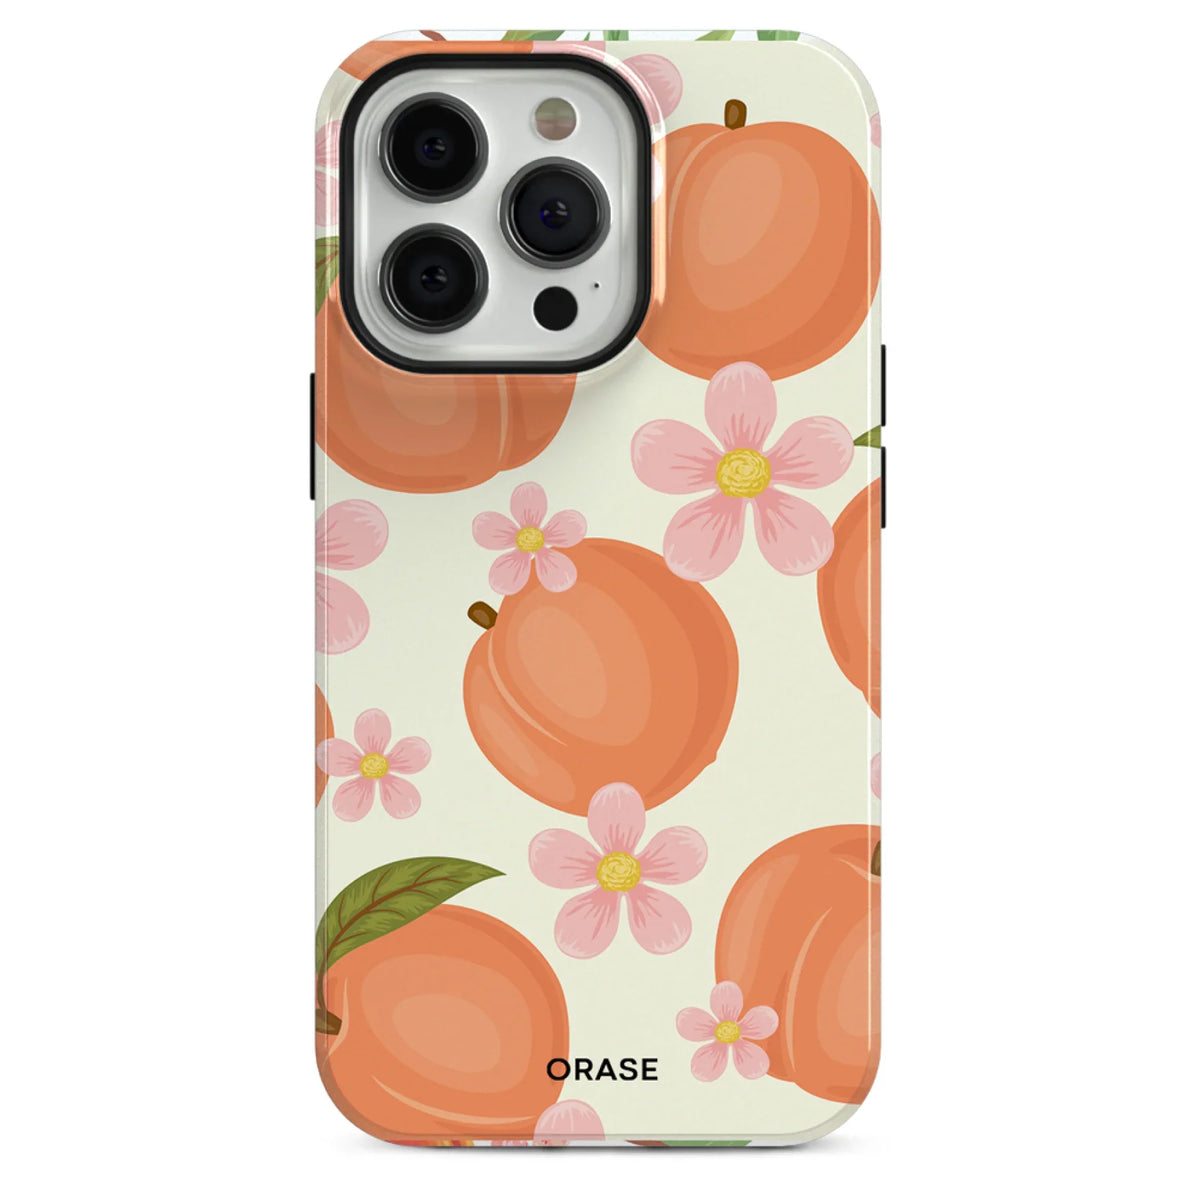 Tender Peach iPhone Case - iPhone 12 Pro